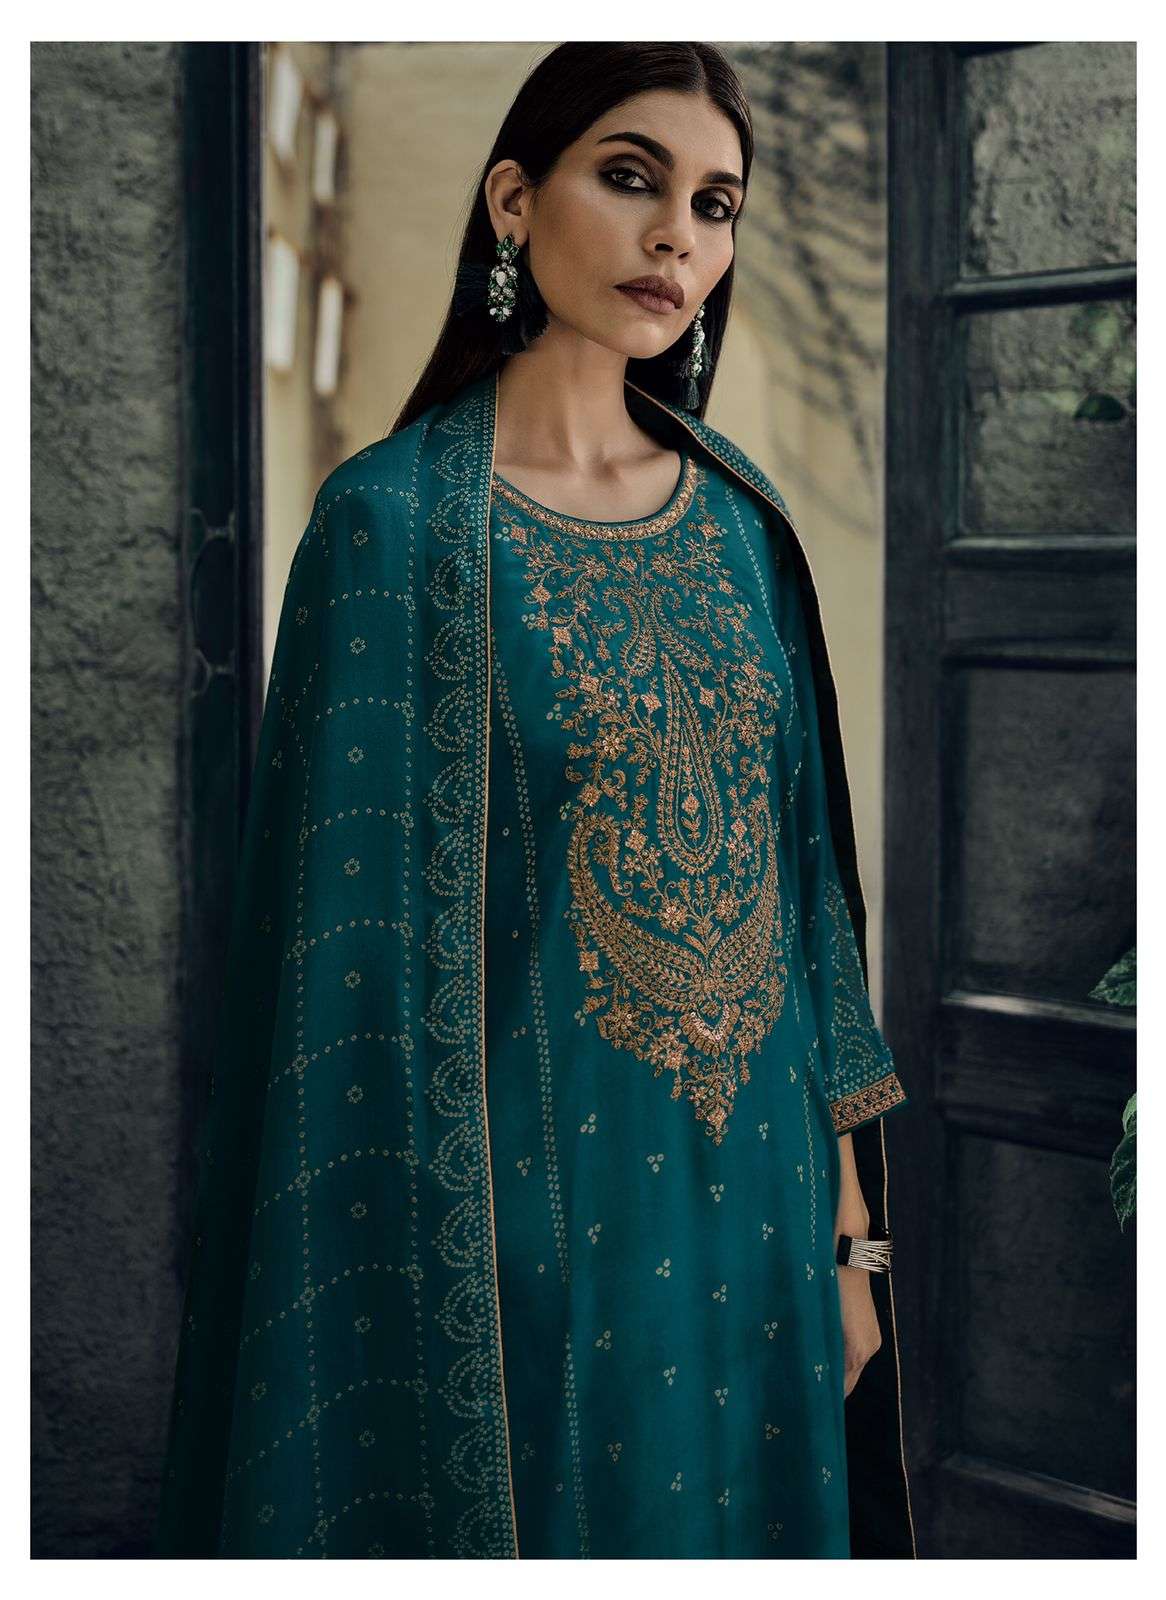 varsha fashion tradition 01-06 series viscose organza designer salwar suits exporter surat 